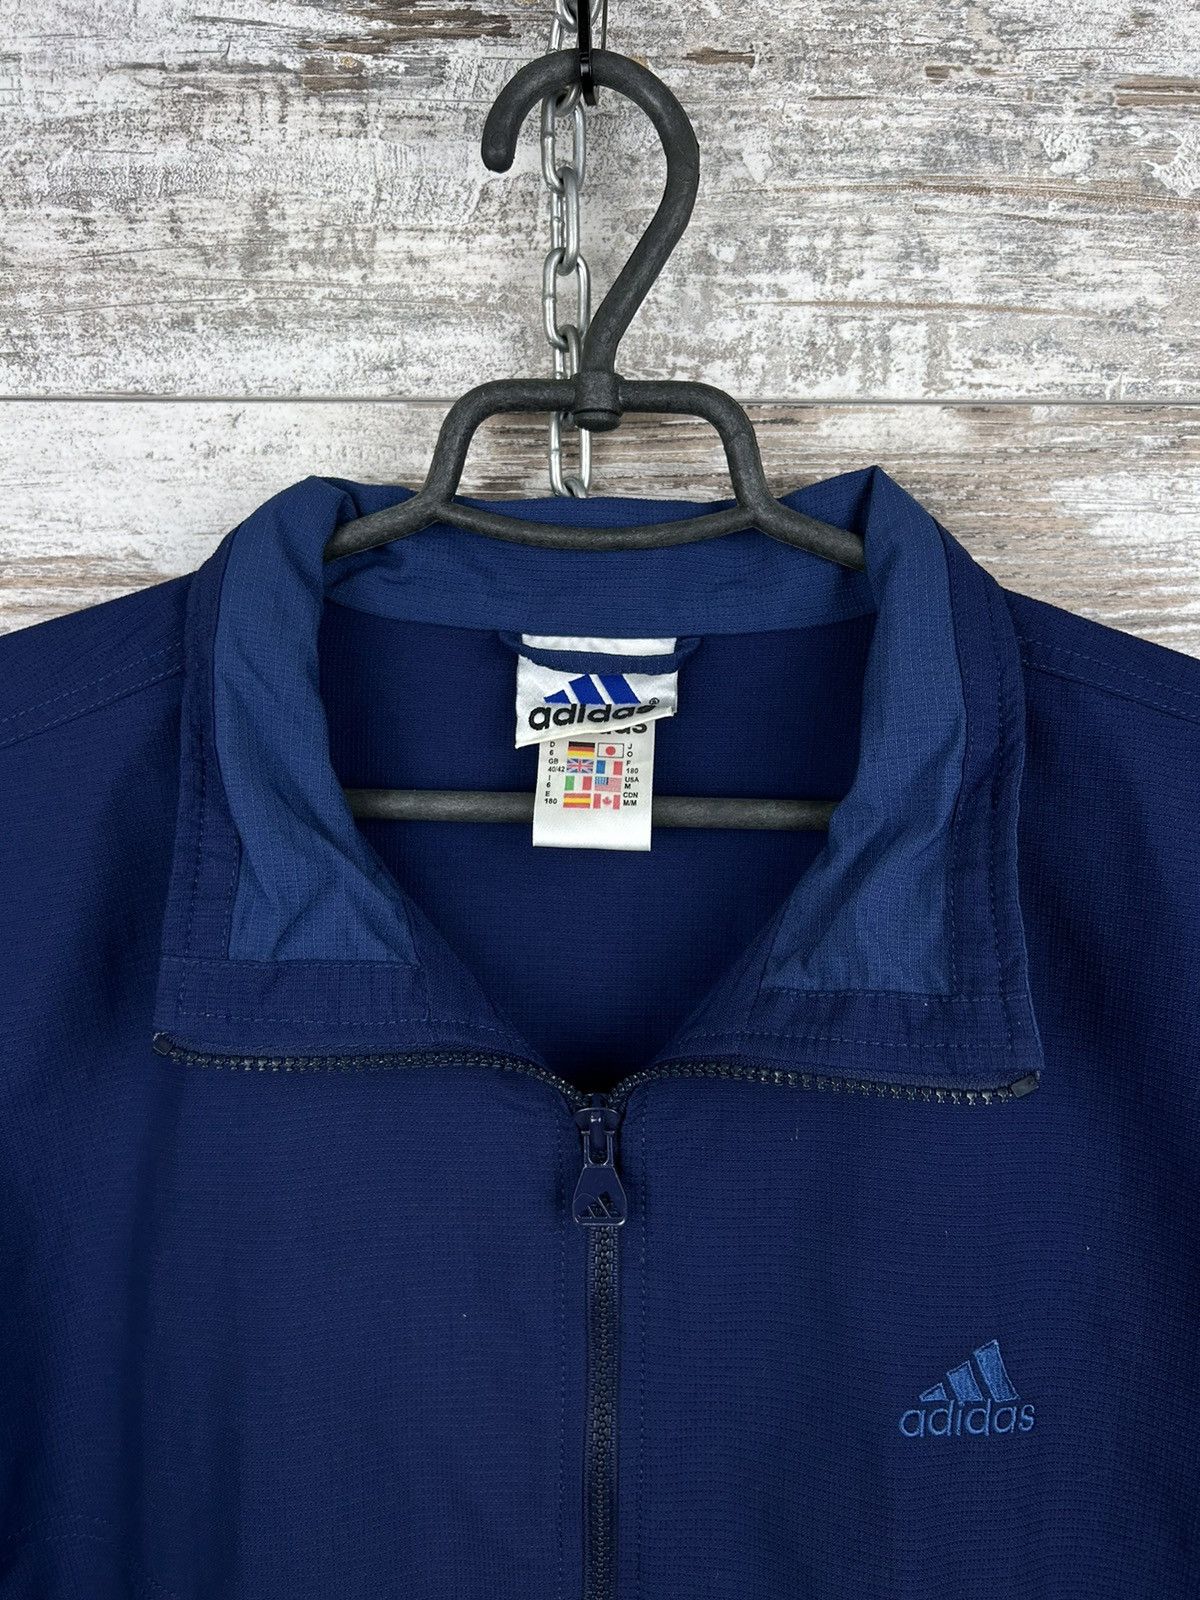 Adidas Mens Vintage Adidas Stripes Olympic track jacket y2k rare Size US M / EU 48-50 / 2 - 4 Thumbnail